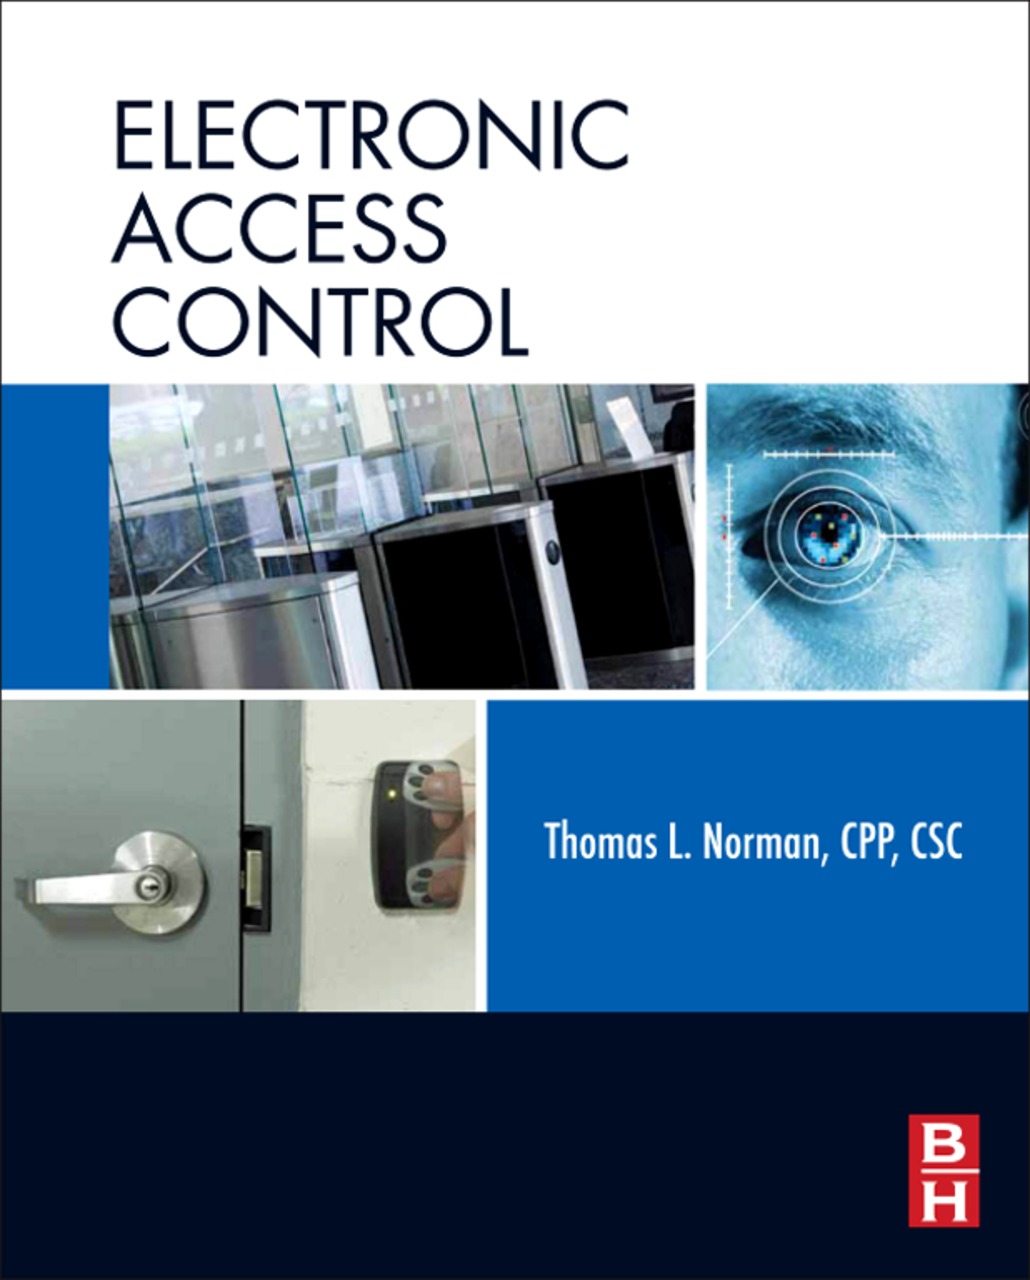 Electronic Access Control - Thomas L. Norman